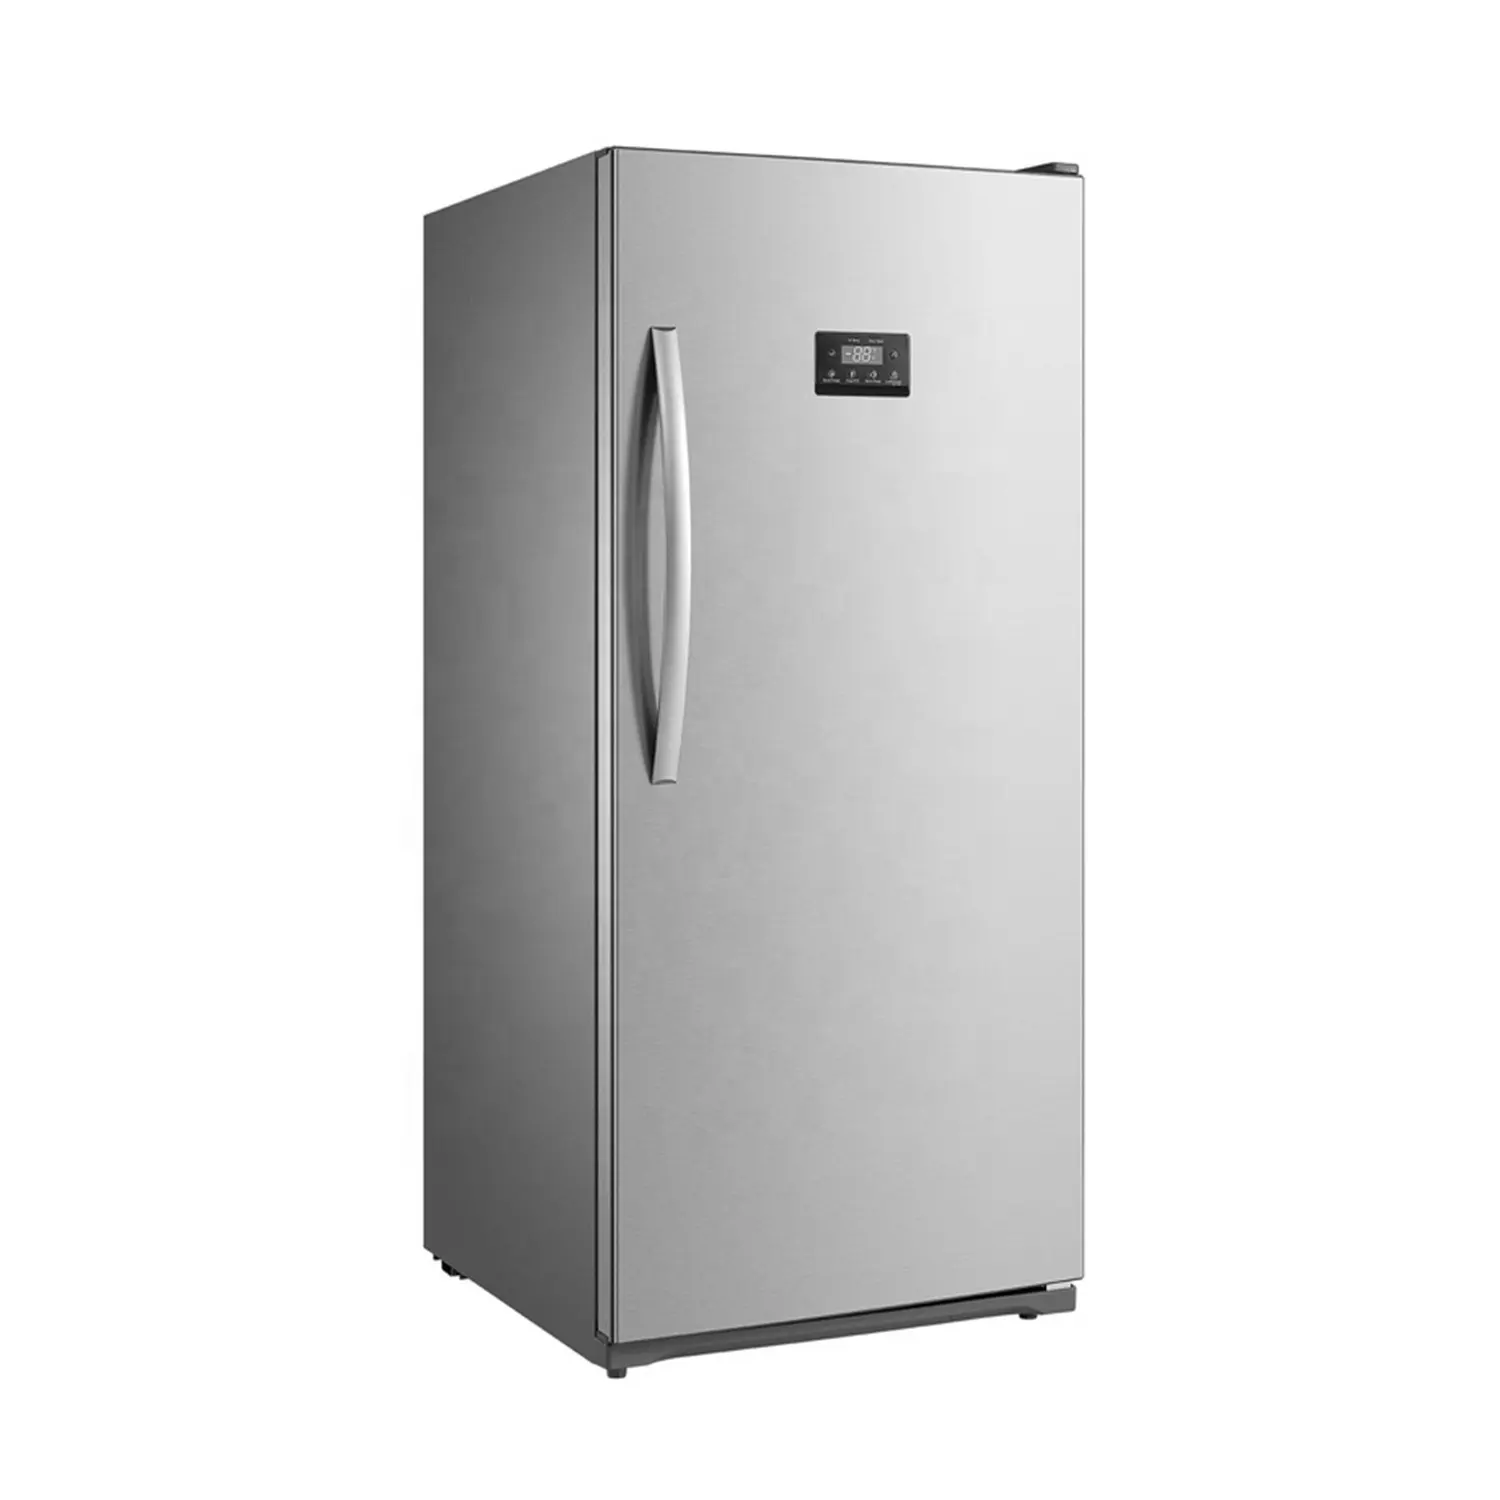 392L Stainless Steel Single Door Frost Free Vertical Refrigerator Freezer